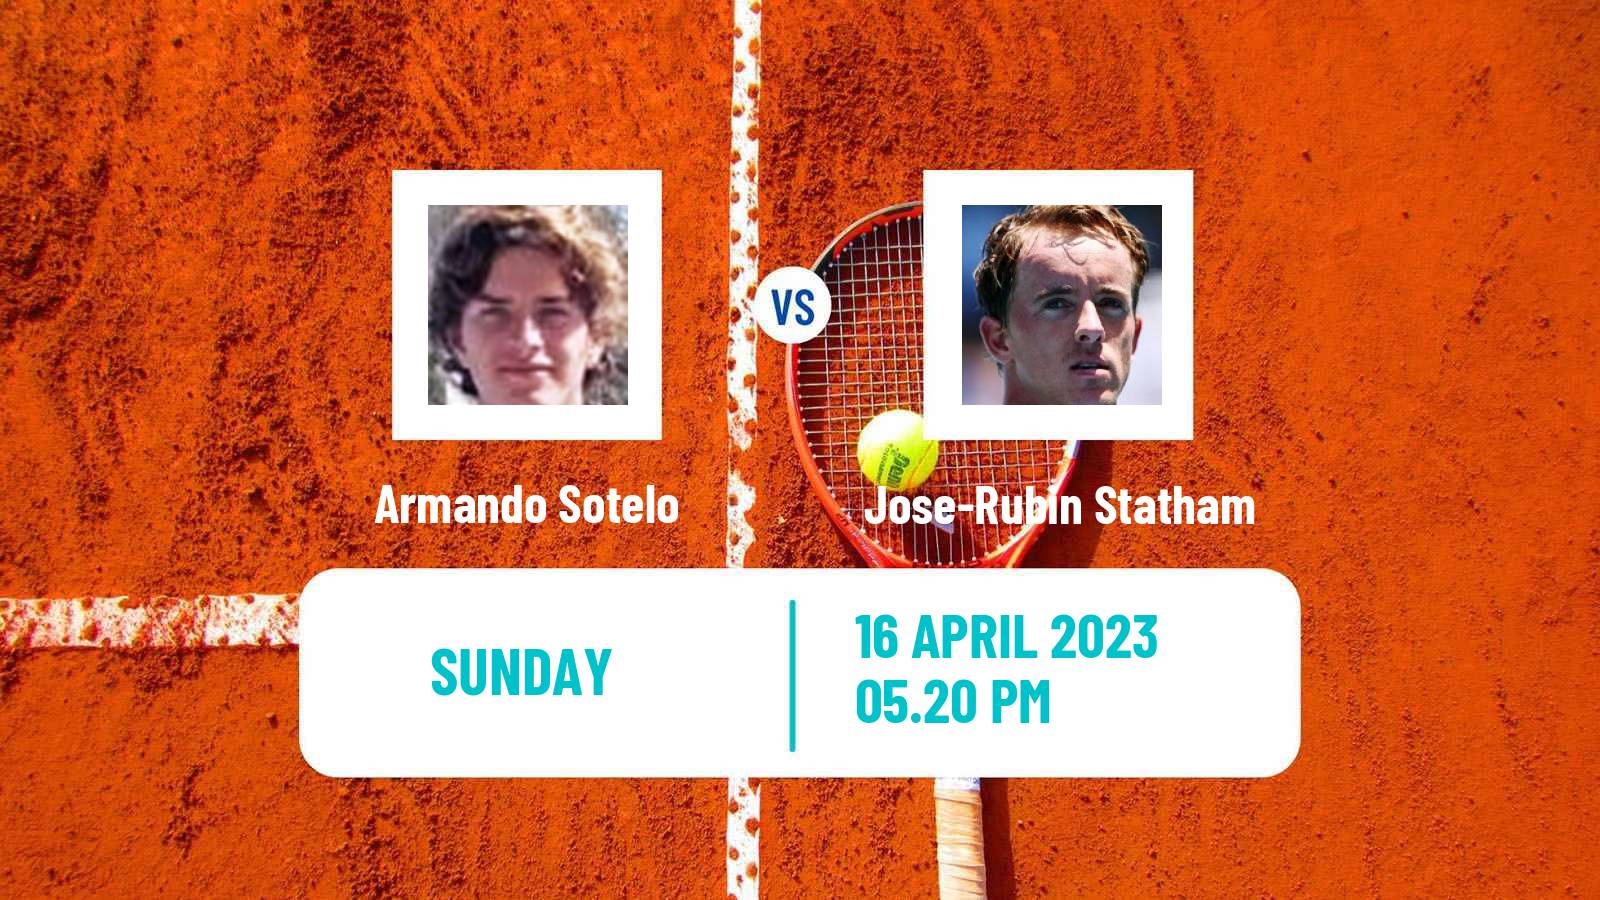 Tennis ATP Challenger Armando Sotelo - Jose-Rubin Statham